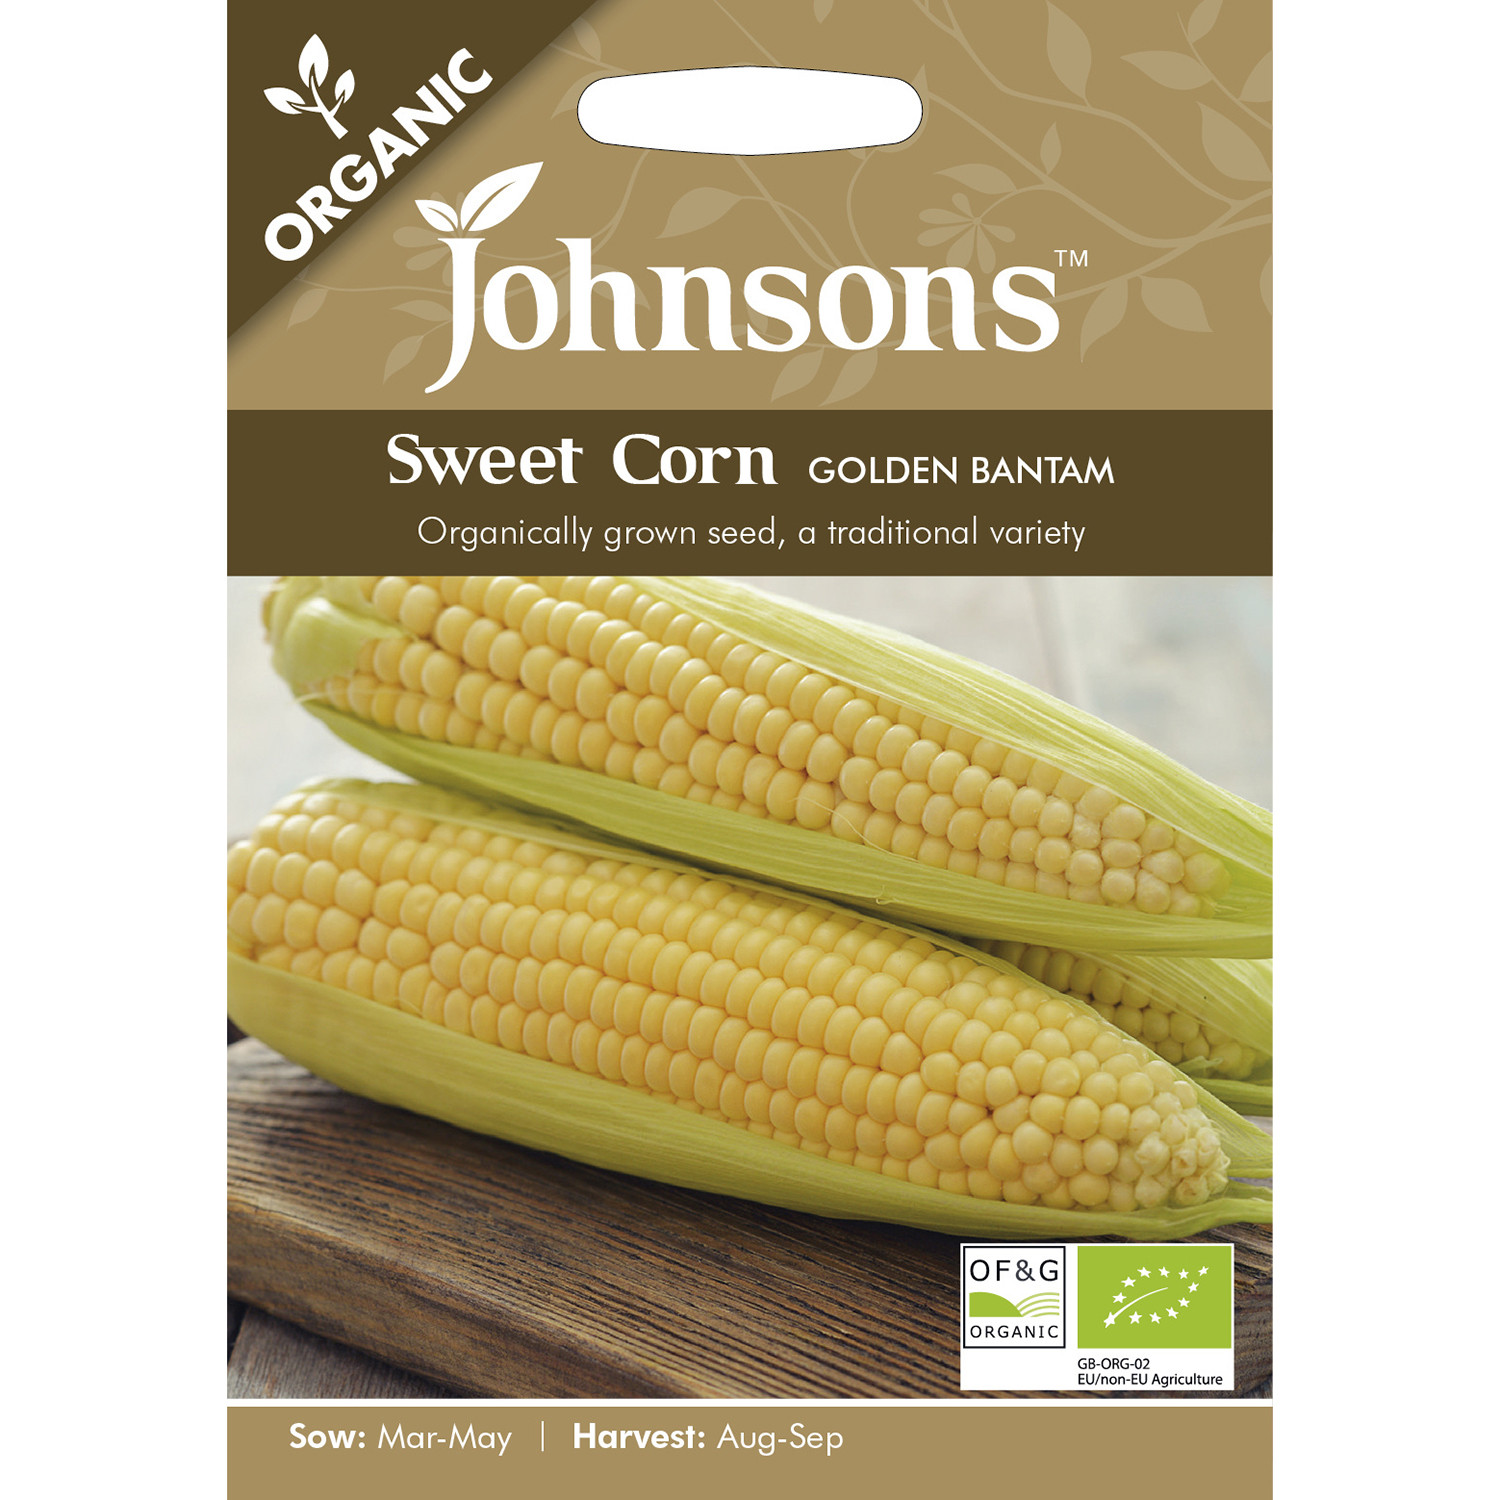 Johnsons Organic Golden Bantam Sweet Corn Seeds Image 2